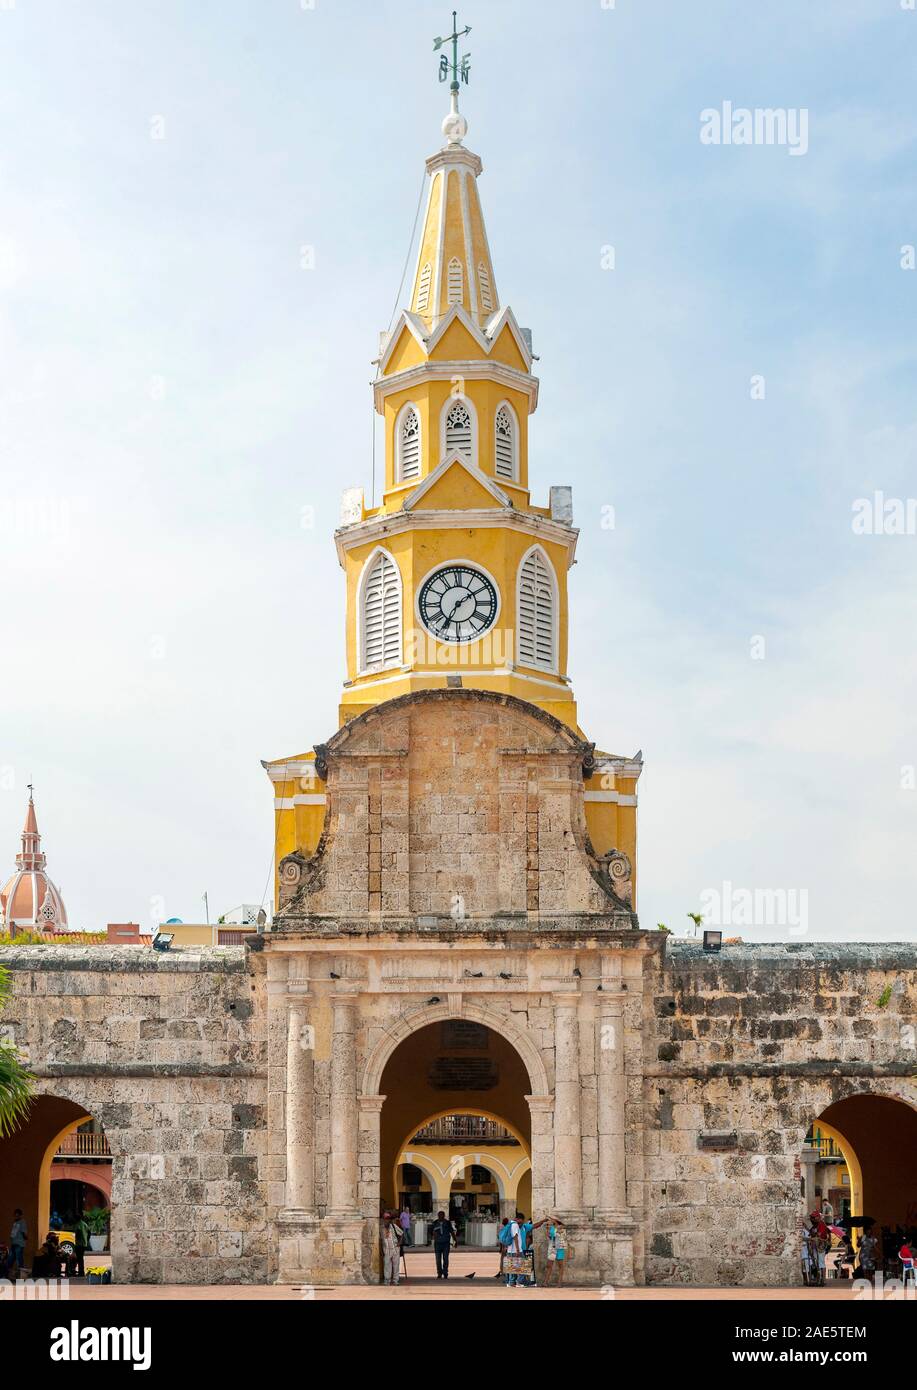 The Puerta del Reloj, Torre del Reloj or Boca del Puente (clock tower monument) in Cartagena, Colombia. Stock Photo